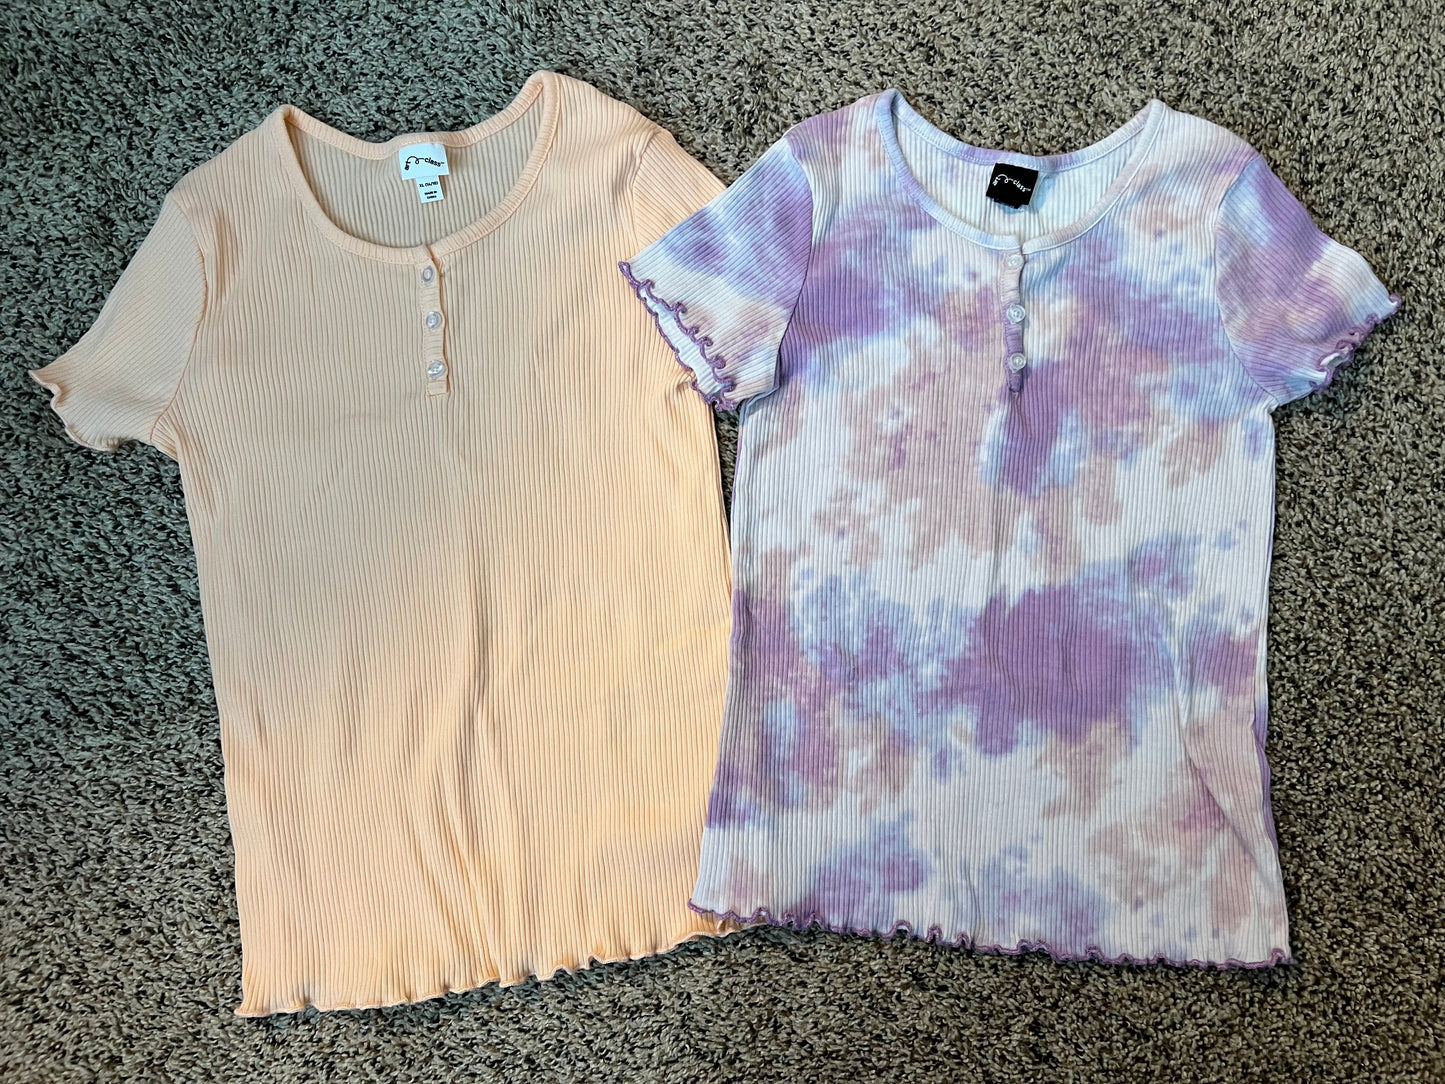 Girls XL (14/16) short sleeve shirts - NWOT - price reduced